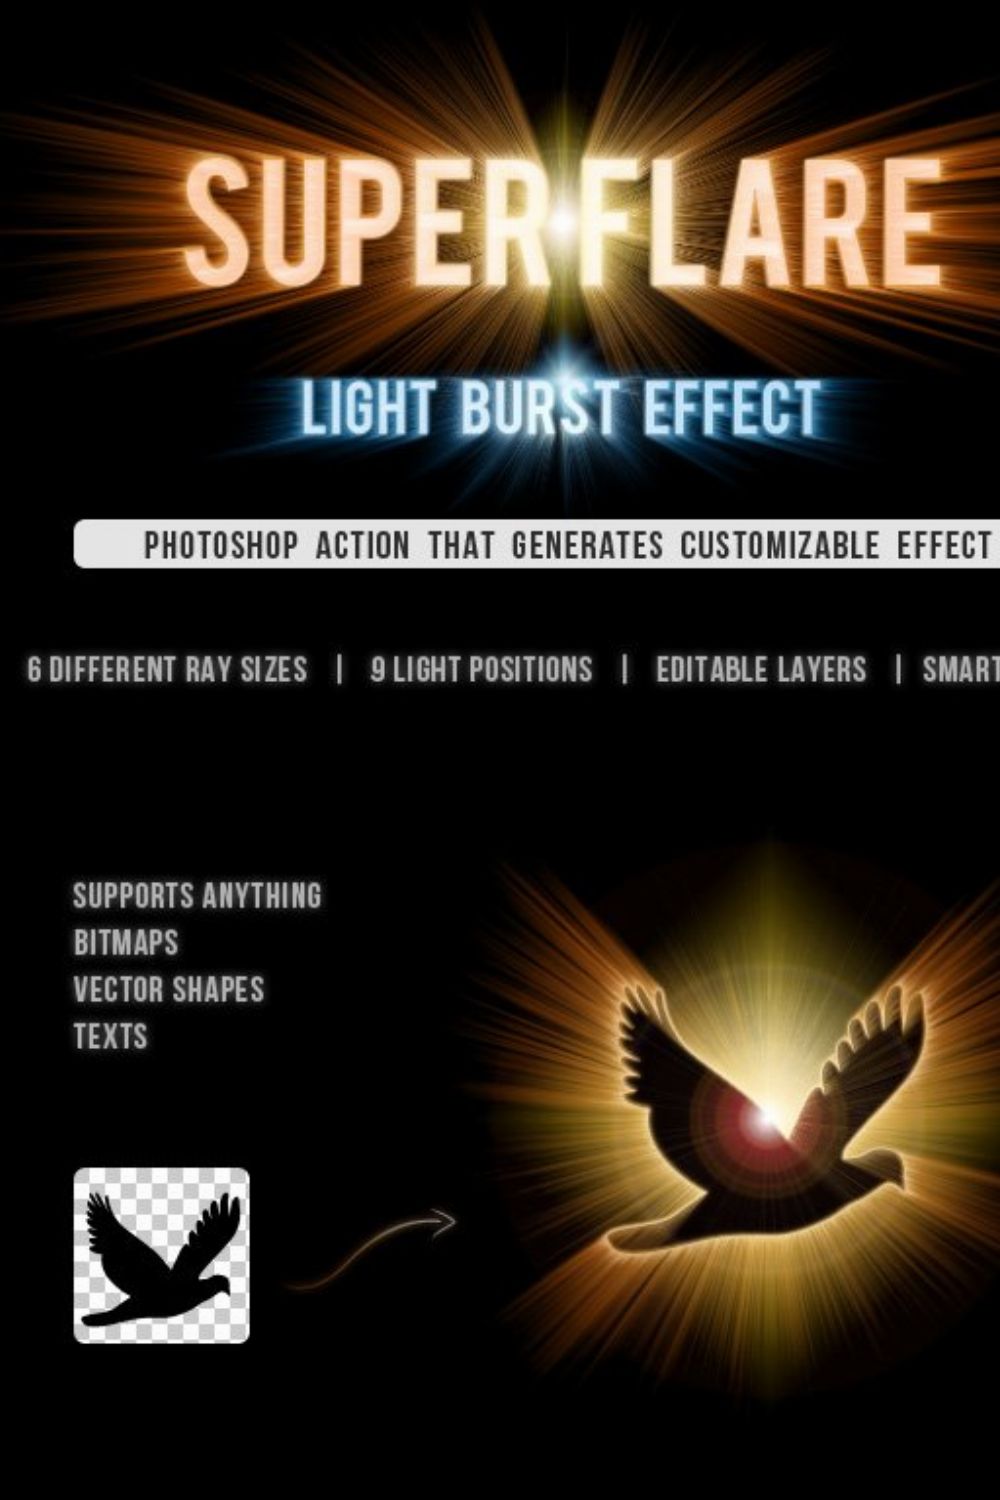 SuperFlare - Back Light Burst Action pinterest preview image.